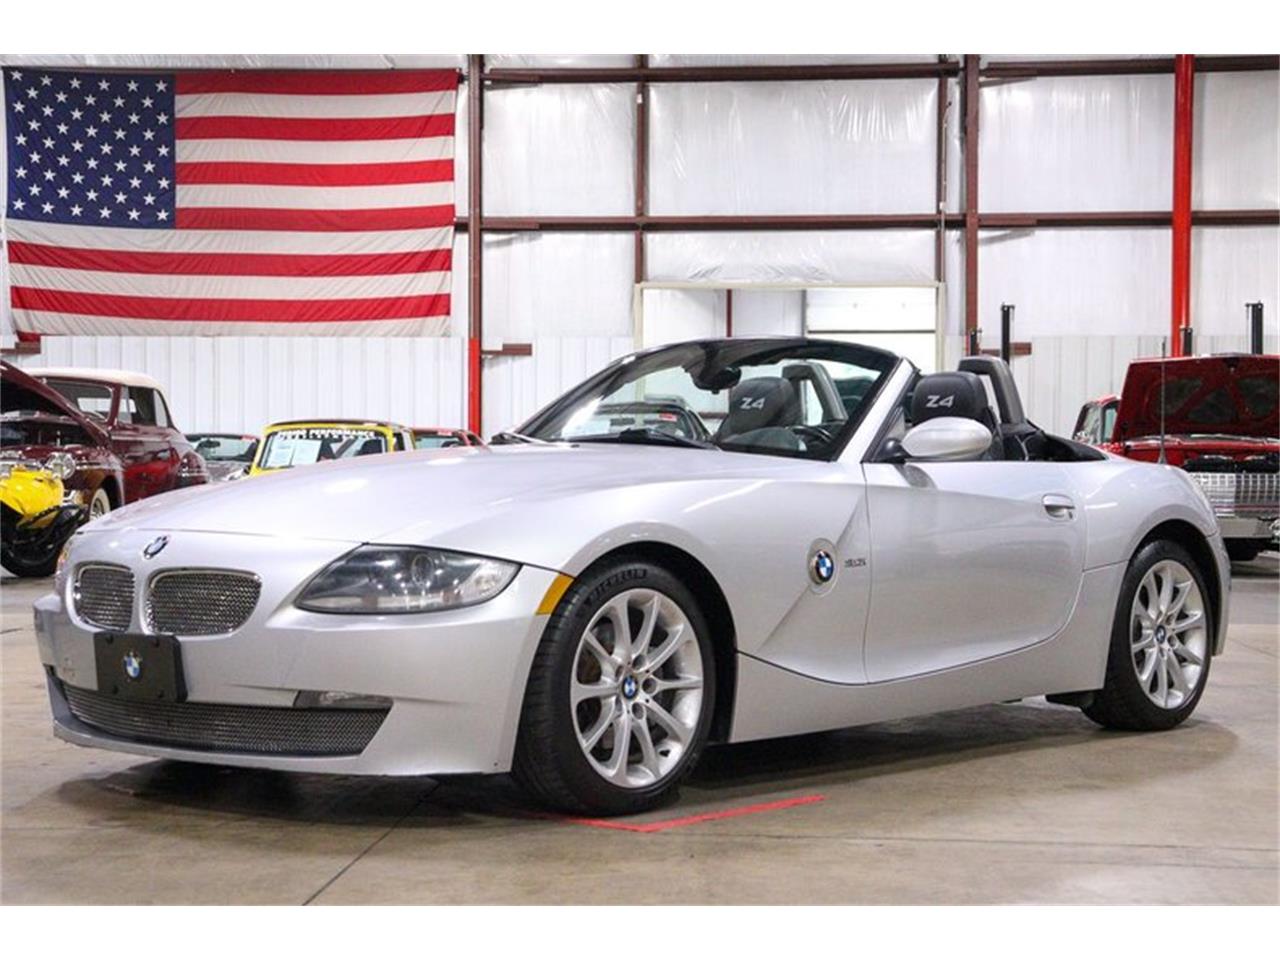 For Sale: 2006 BMW Z4 in Ken2od, Michigan for sale in Grand Rapids, MI